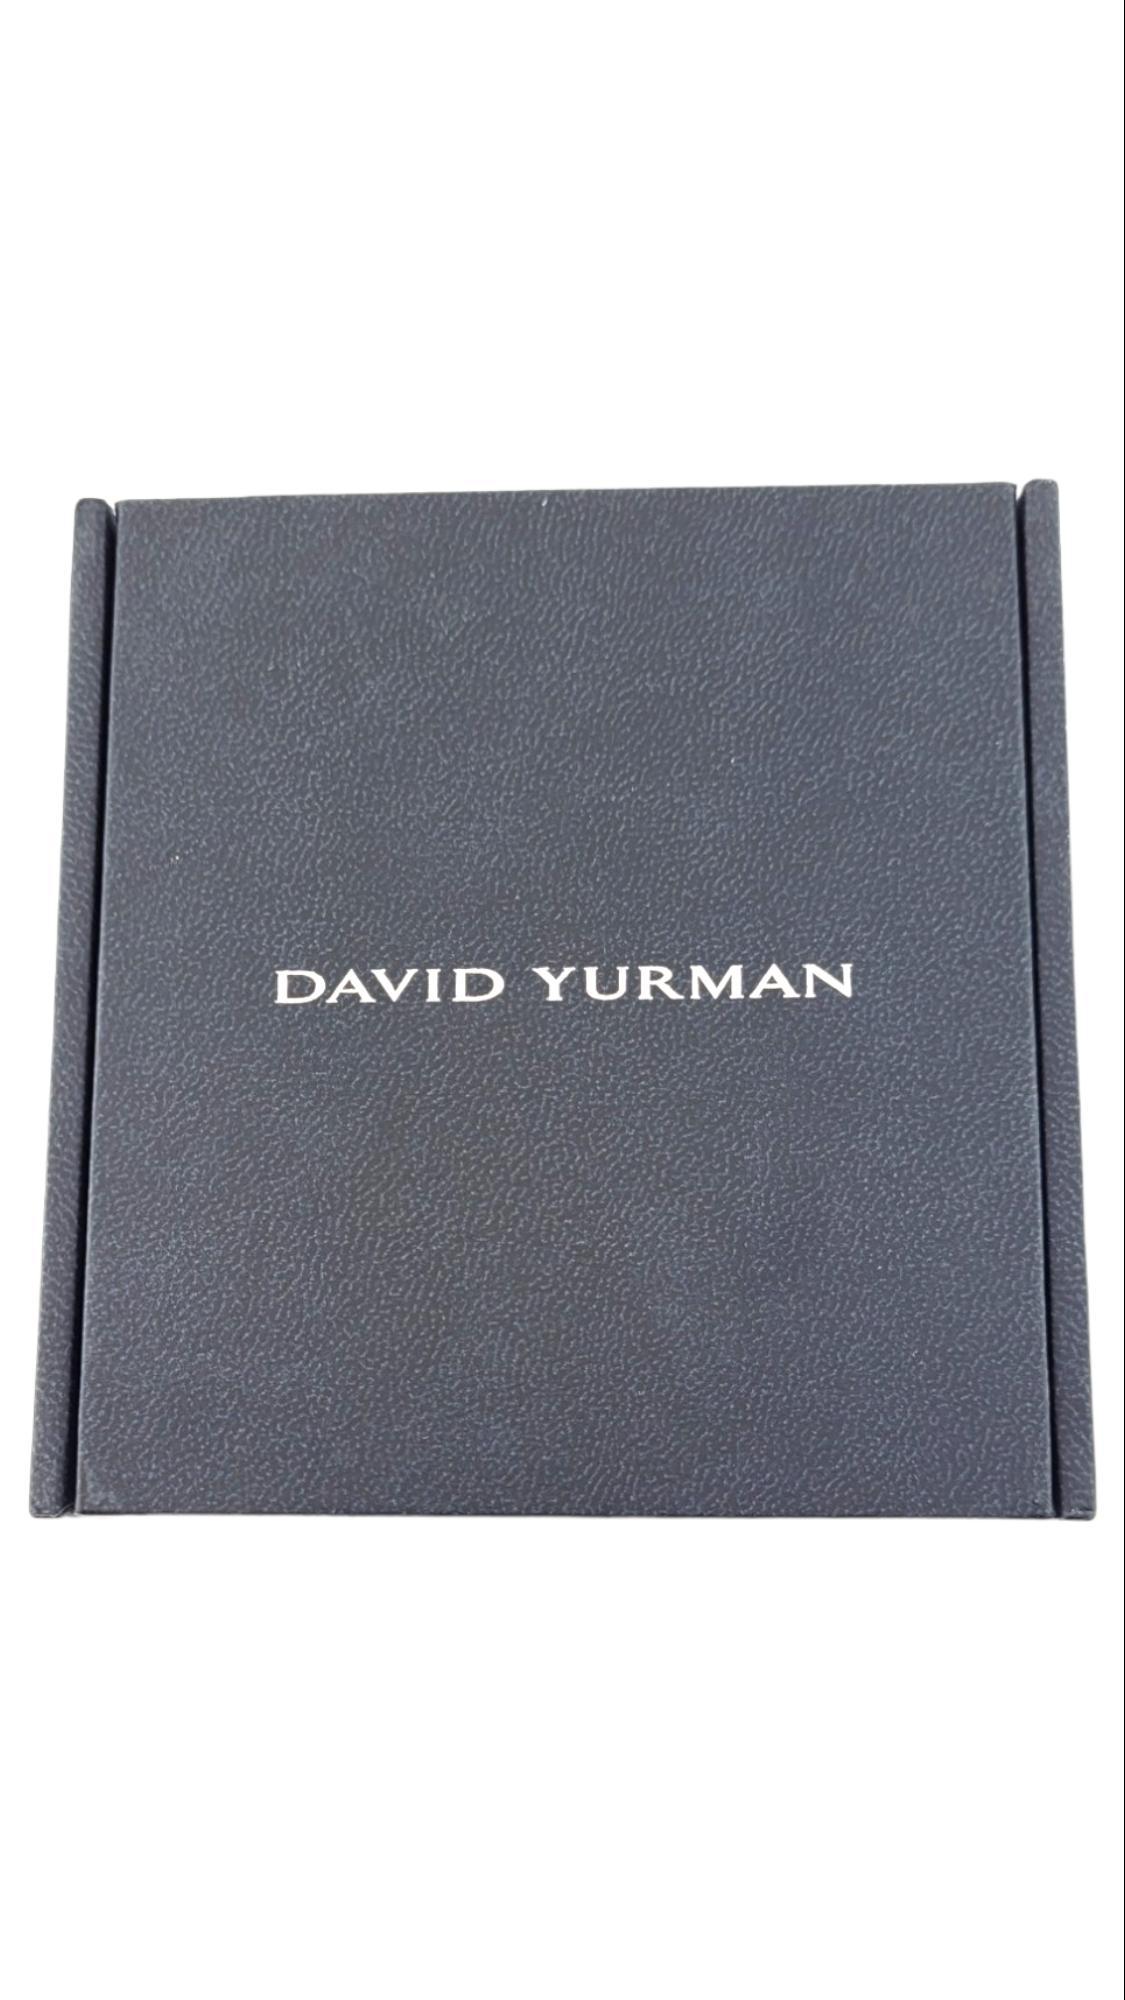 David Yurman 14K & Sterling Silver Box Chain Bracelet with Box #15199 For Sale 3